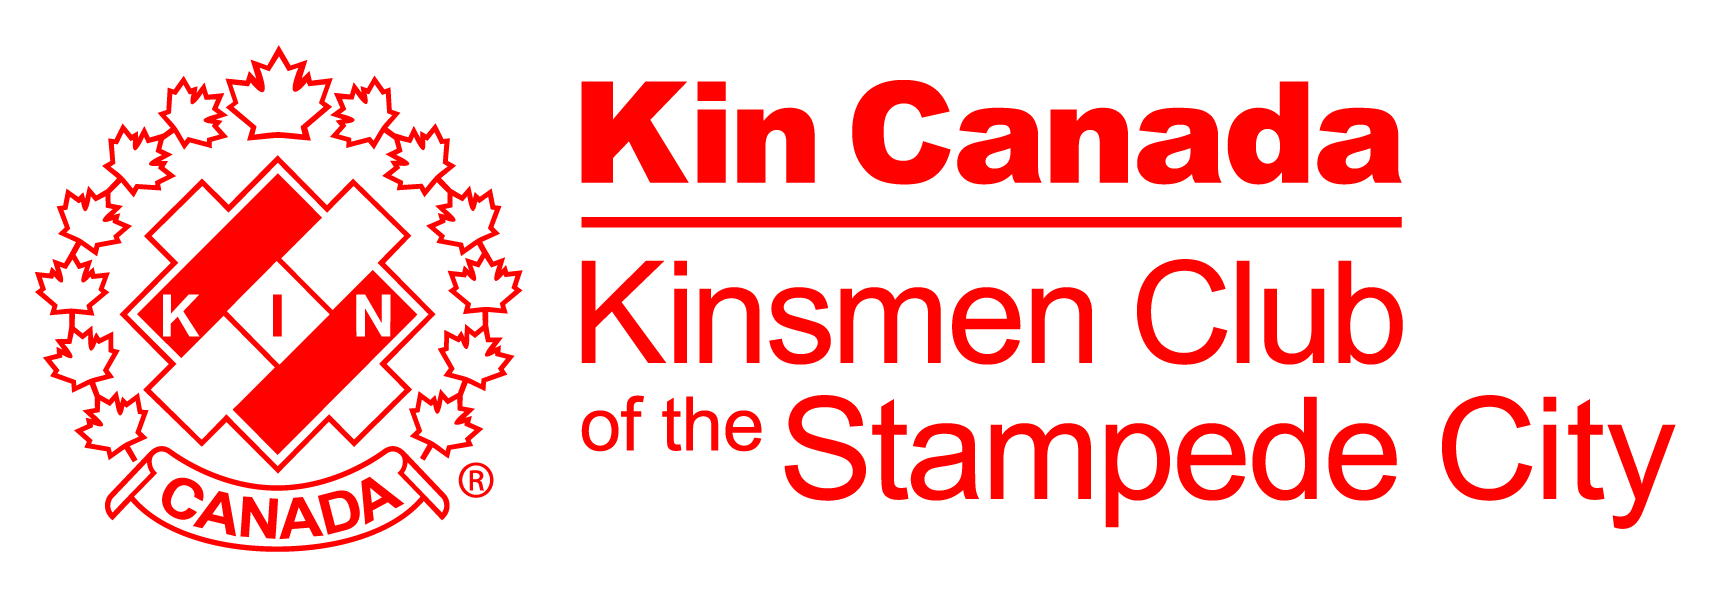 Kinsmen Club of the Stampede City Logo